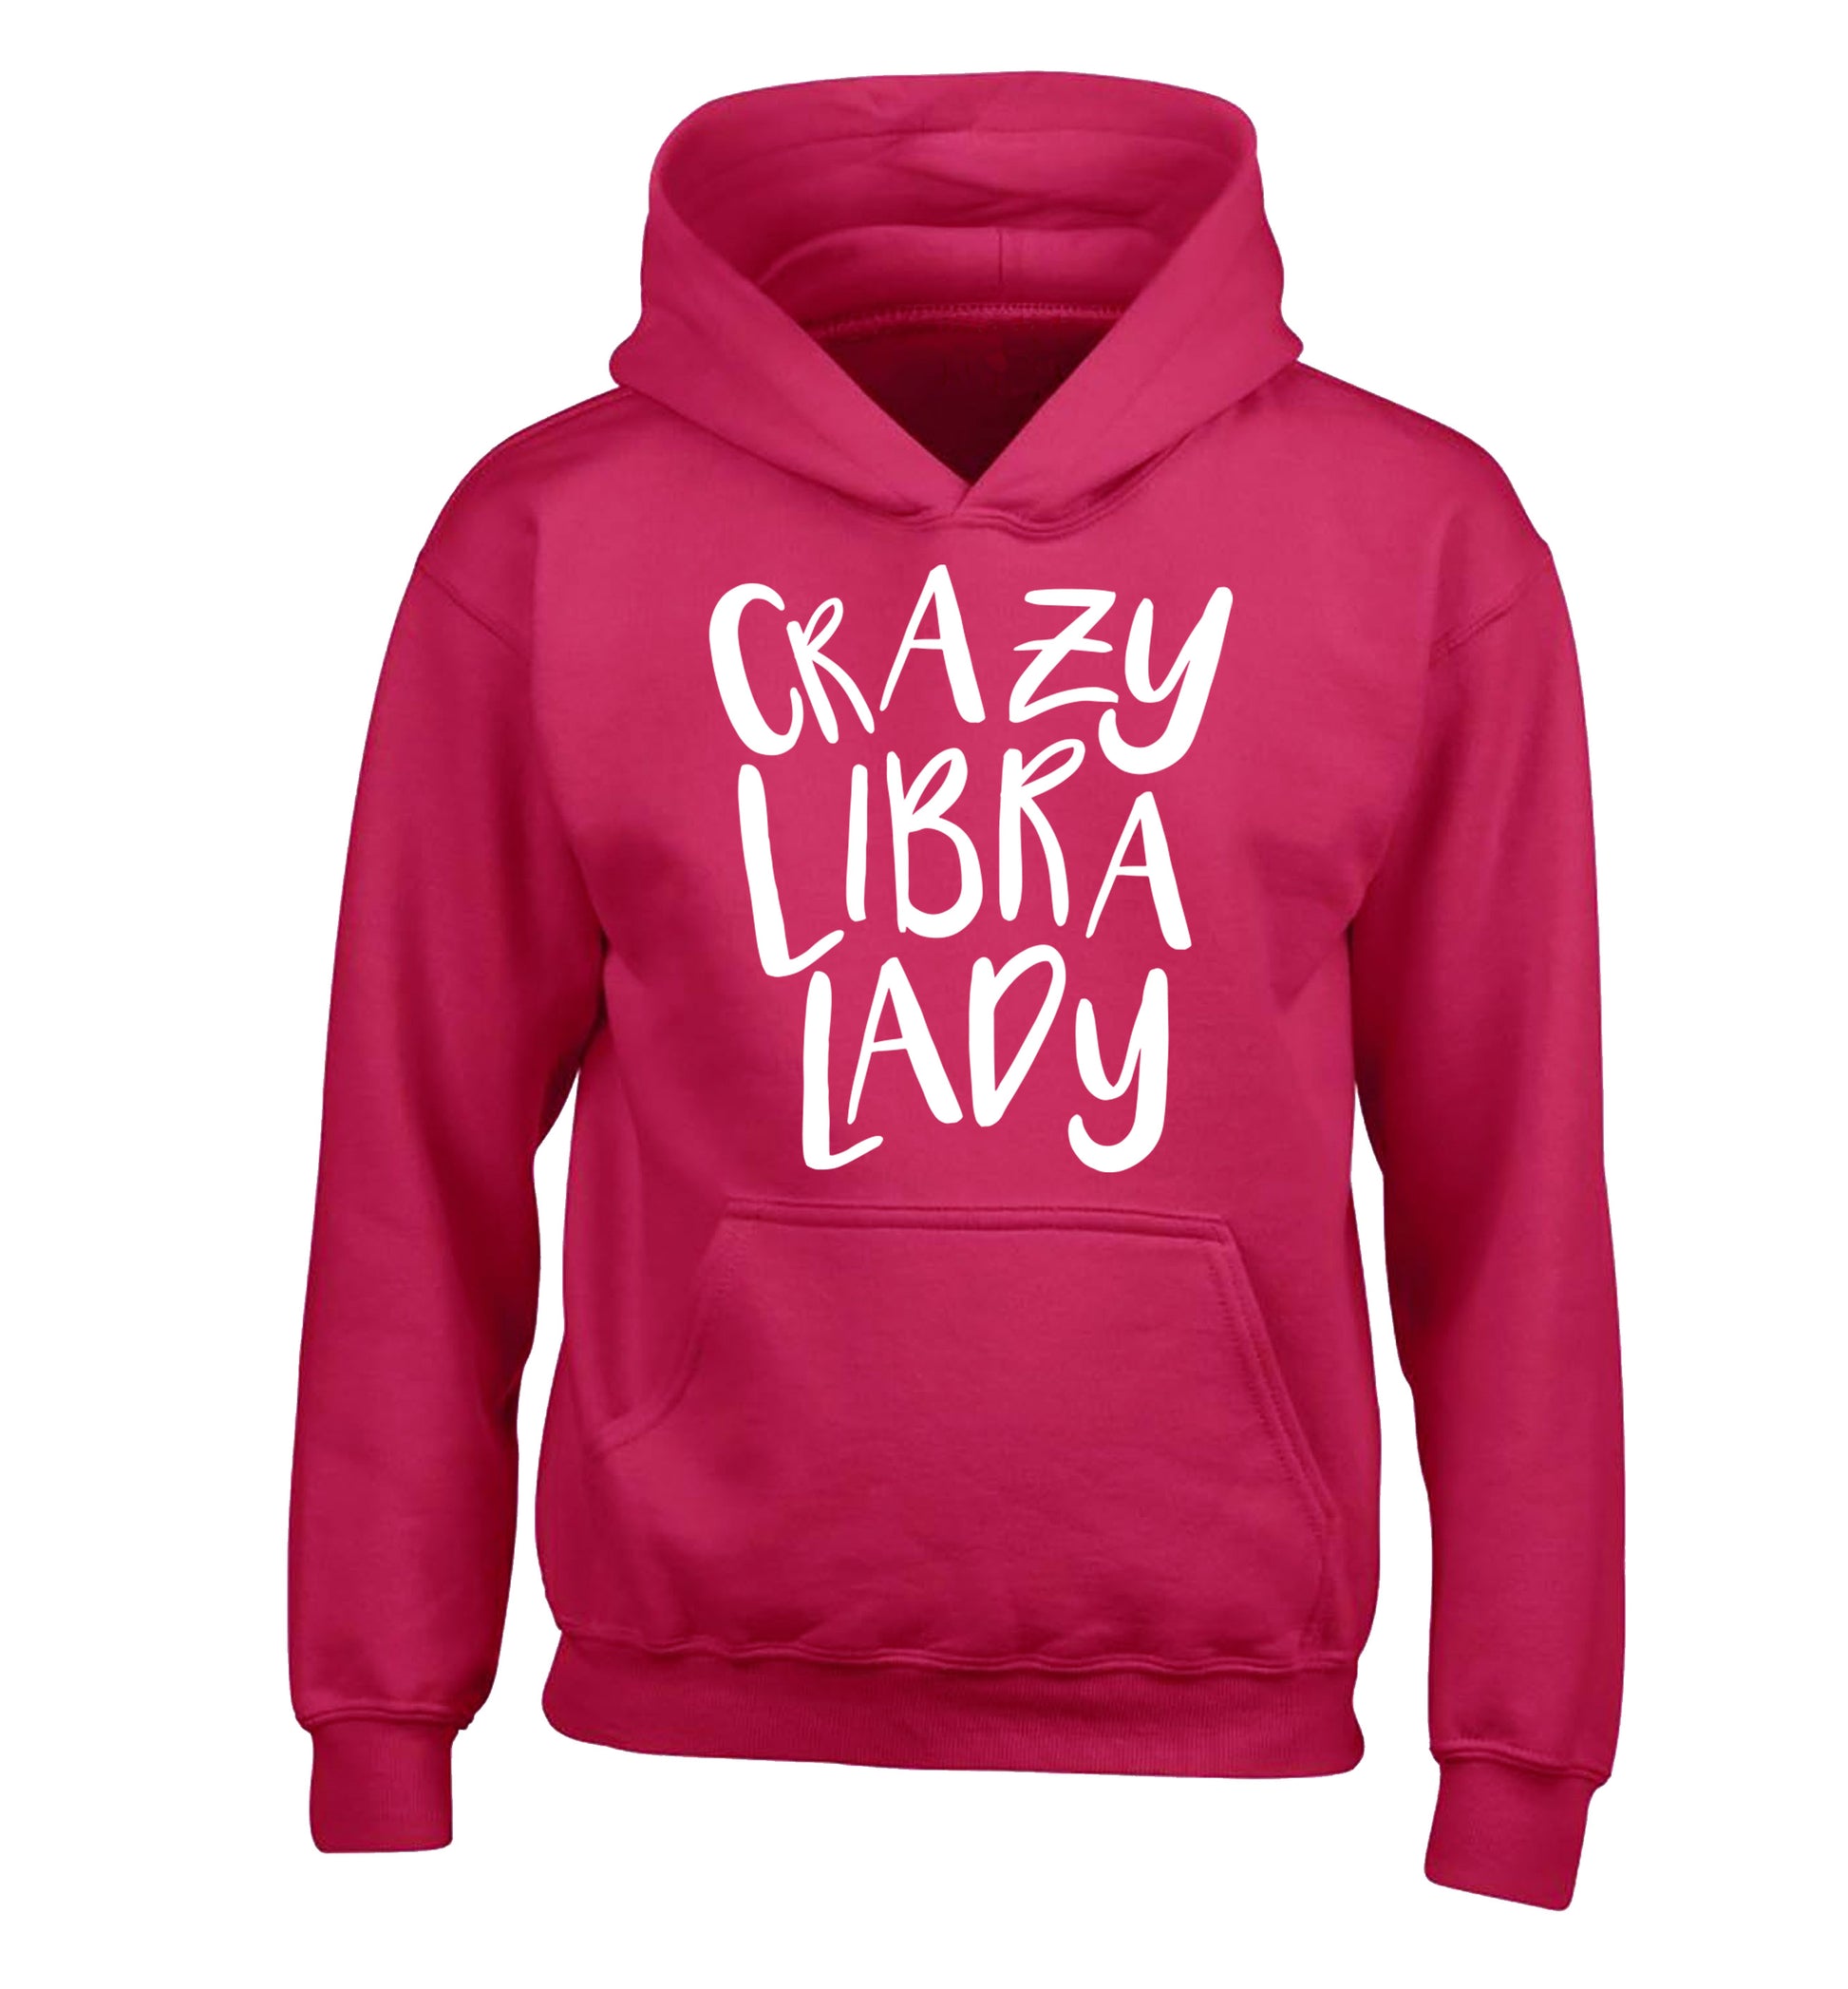 Crazy libra lady children's pink hoodie 12-13 Years